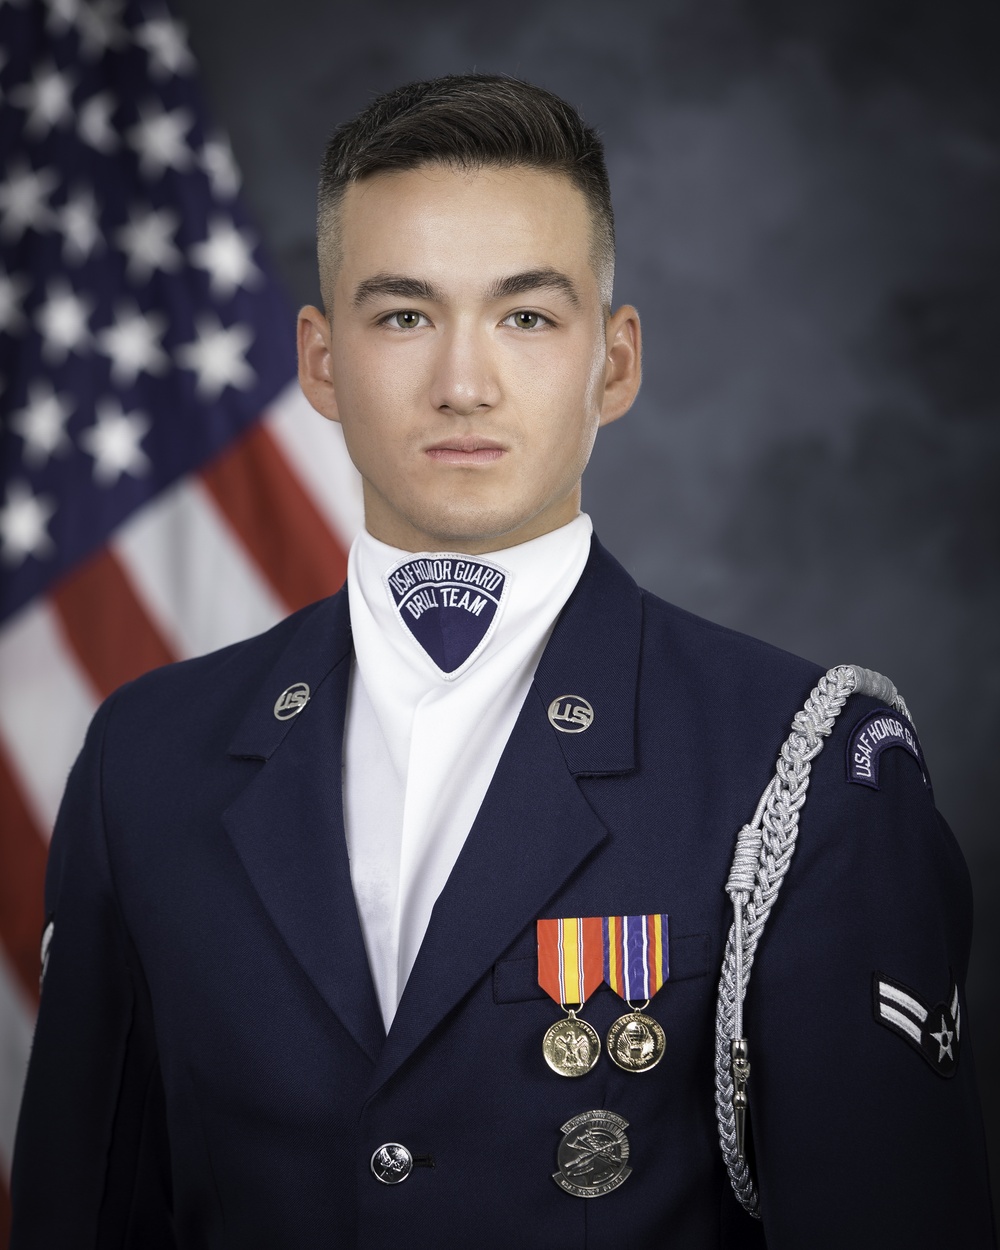 Official portrait, US Air Force Honor Guard Drill Team member, Airman 1st Class Kosei K. Carty, US Air Force